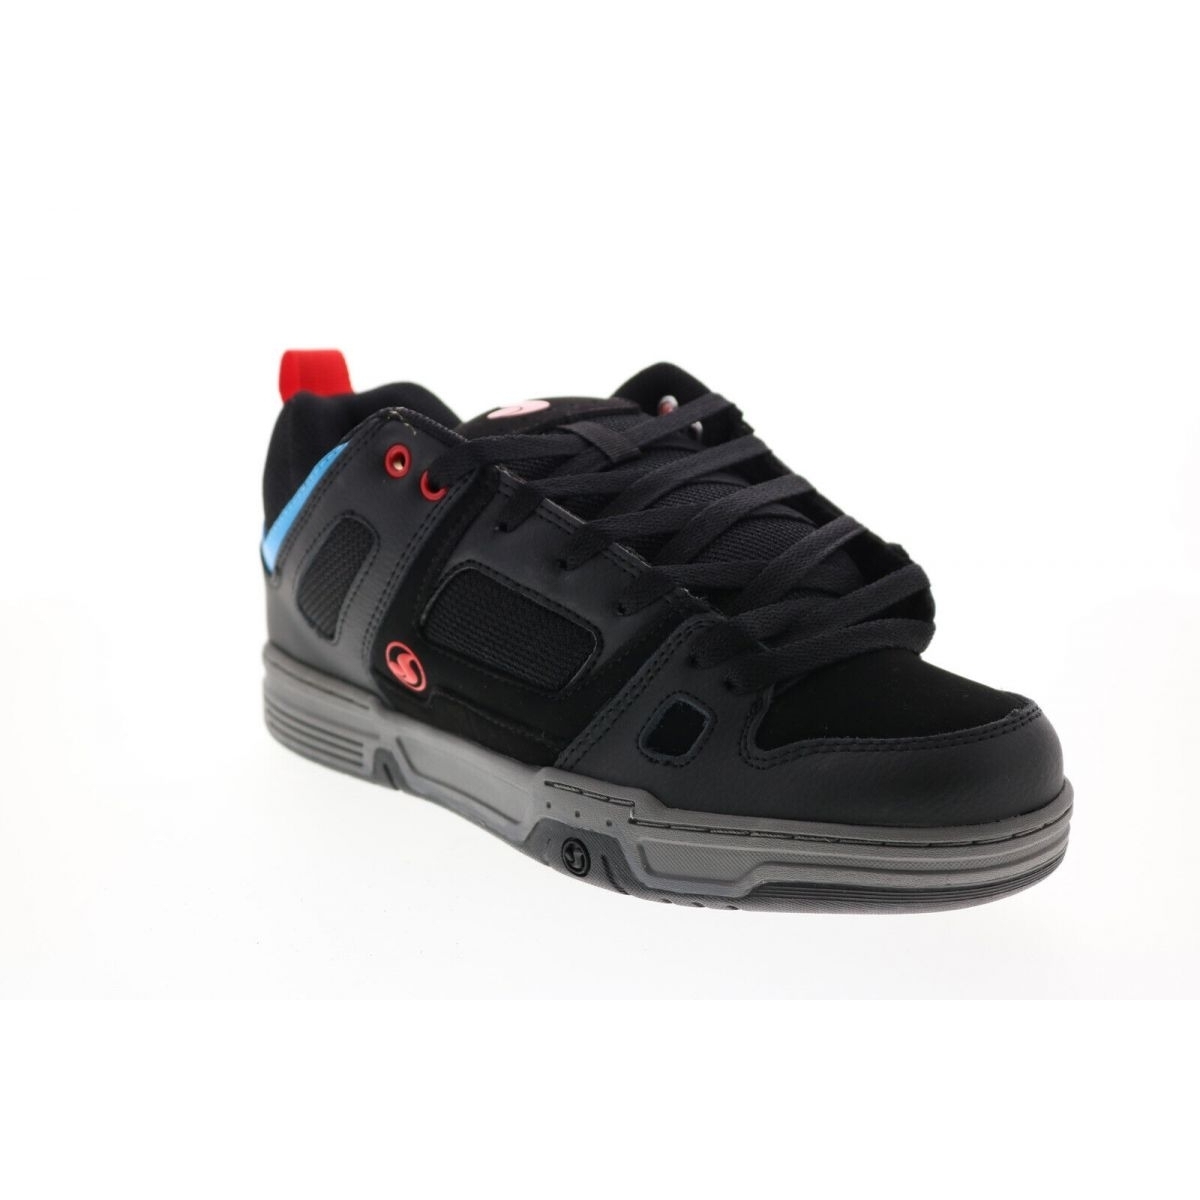 DVS Men's Gambol Skate Shoe 0 BLACK FIERY RED BLUE NUBUCK - BLACK FIERY RED BLUE NUBUCK, 14